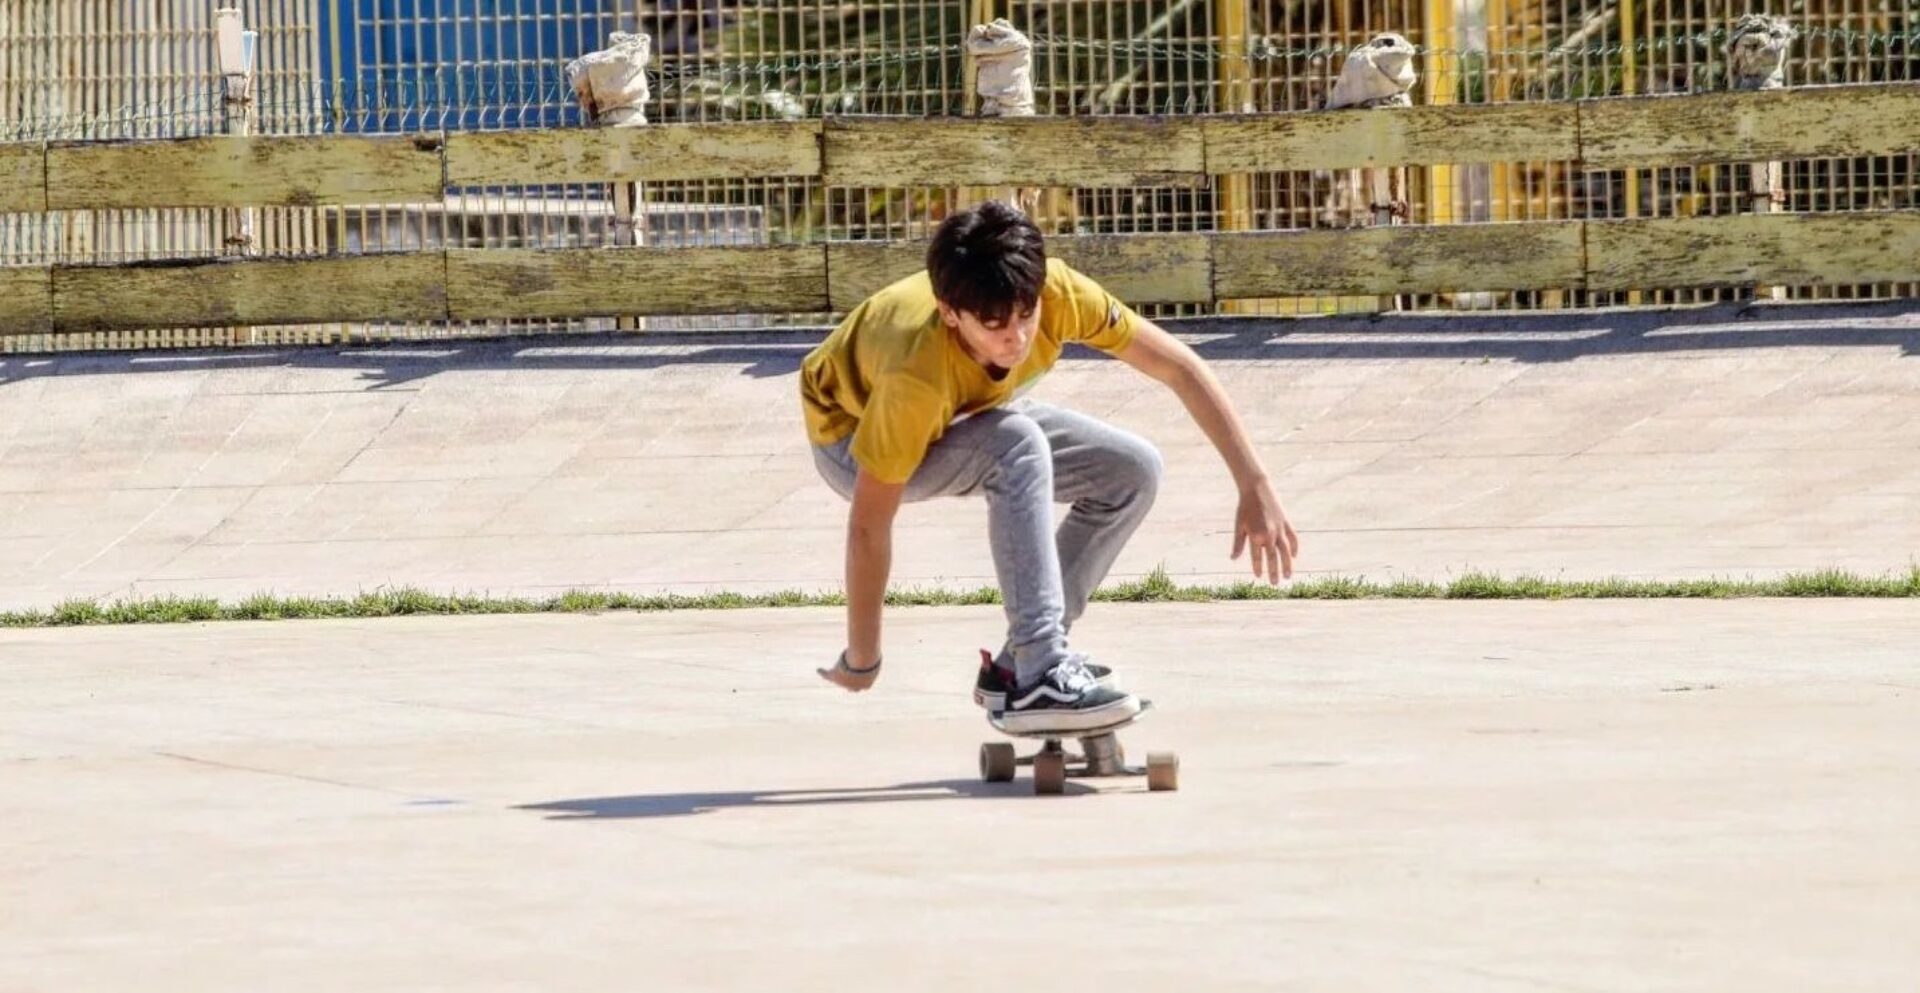 Skateboard lessons Agrigento